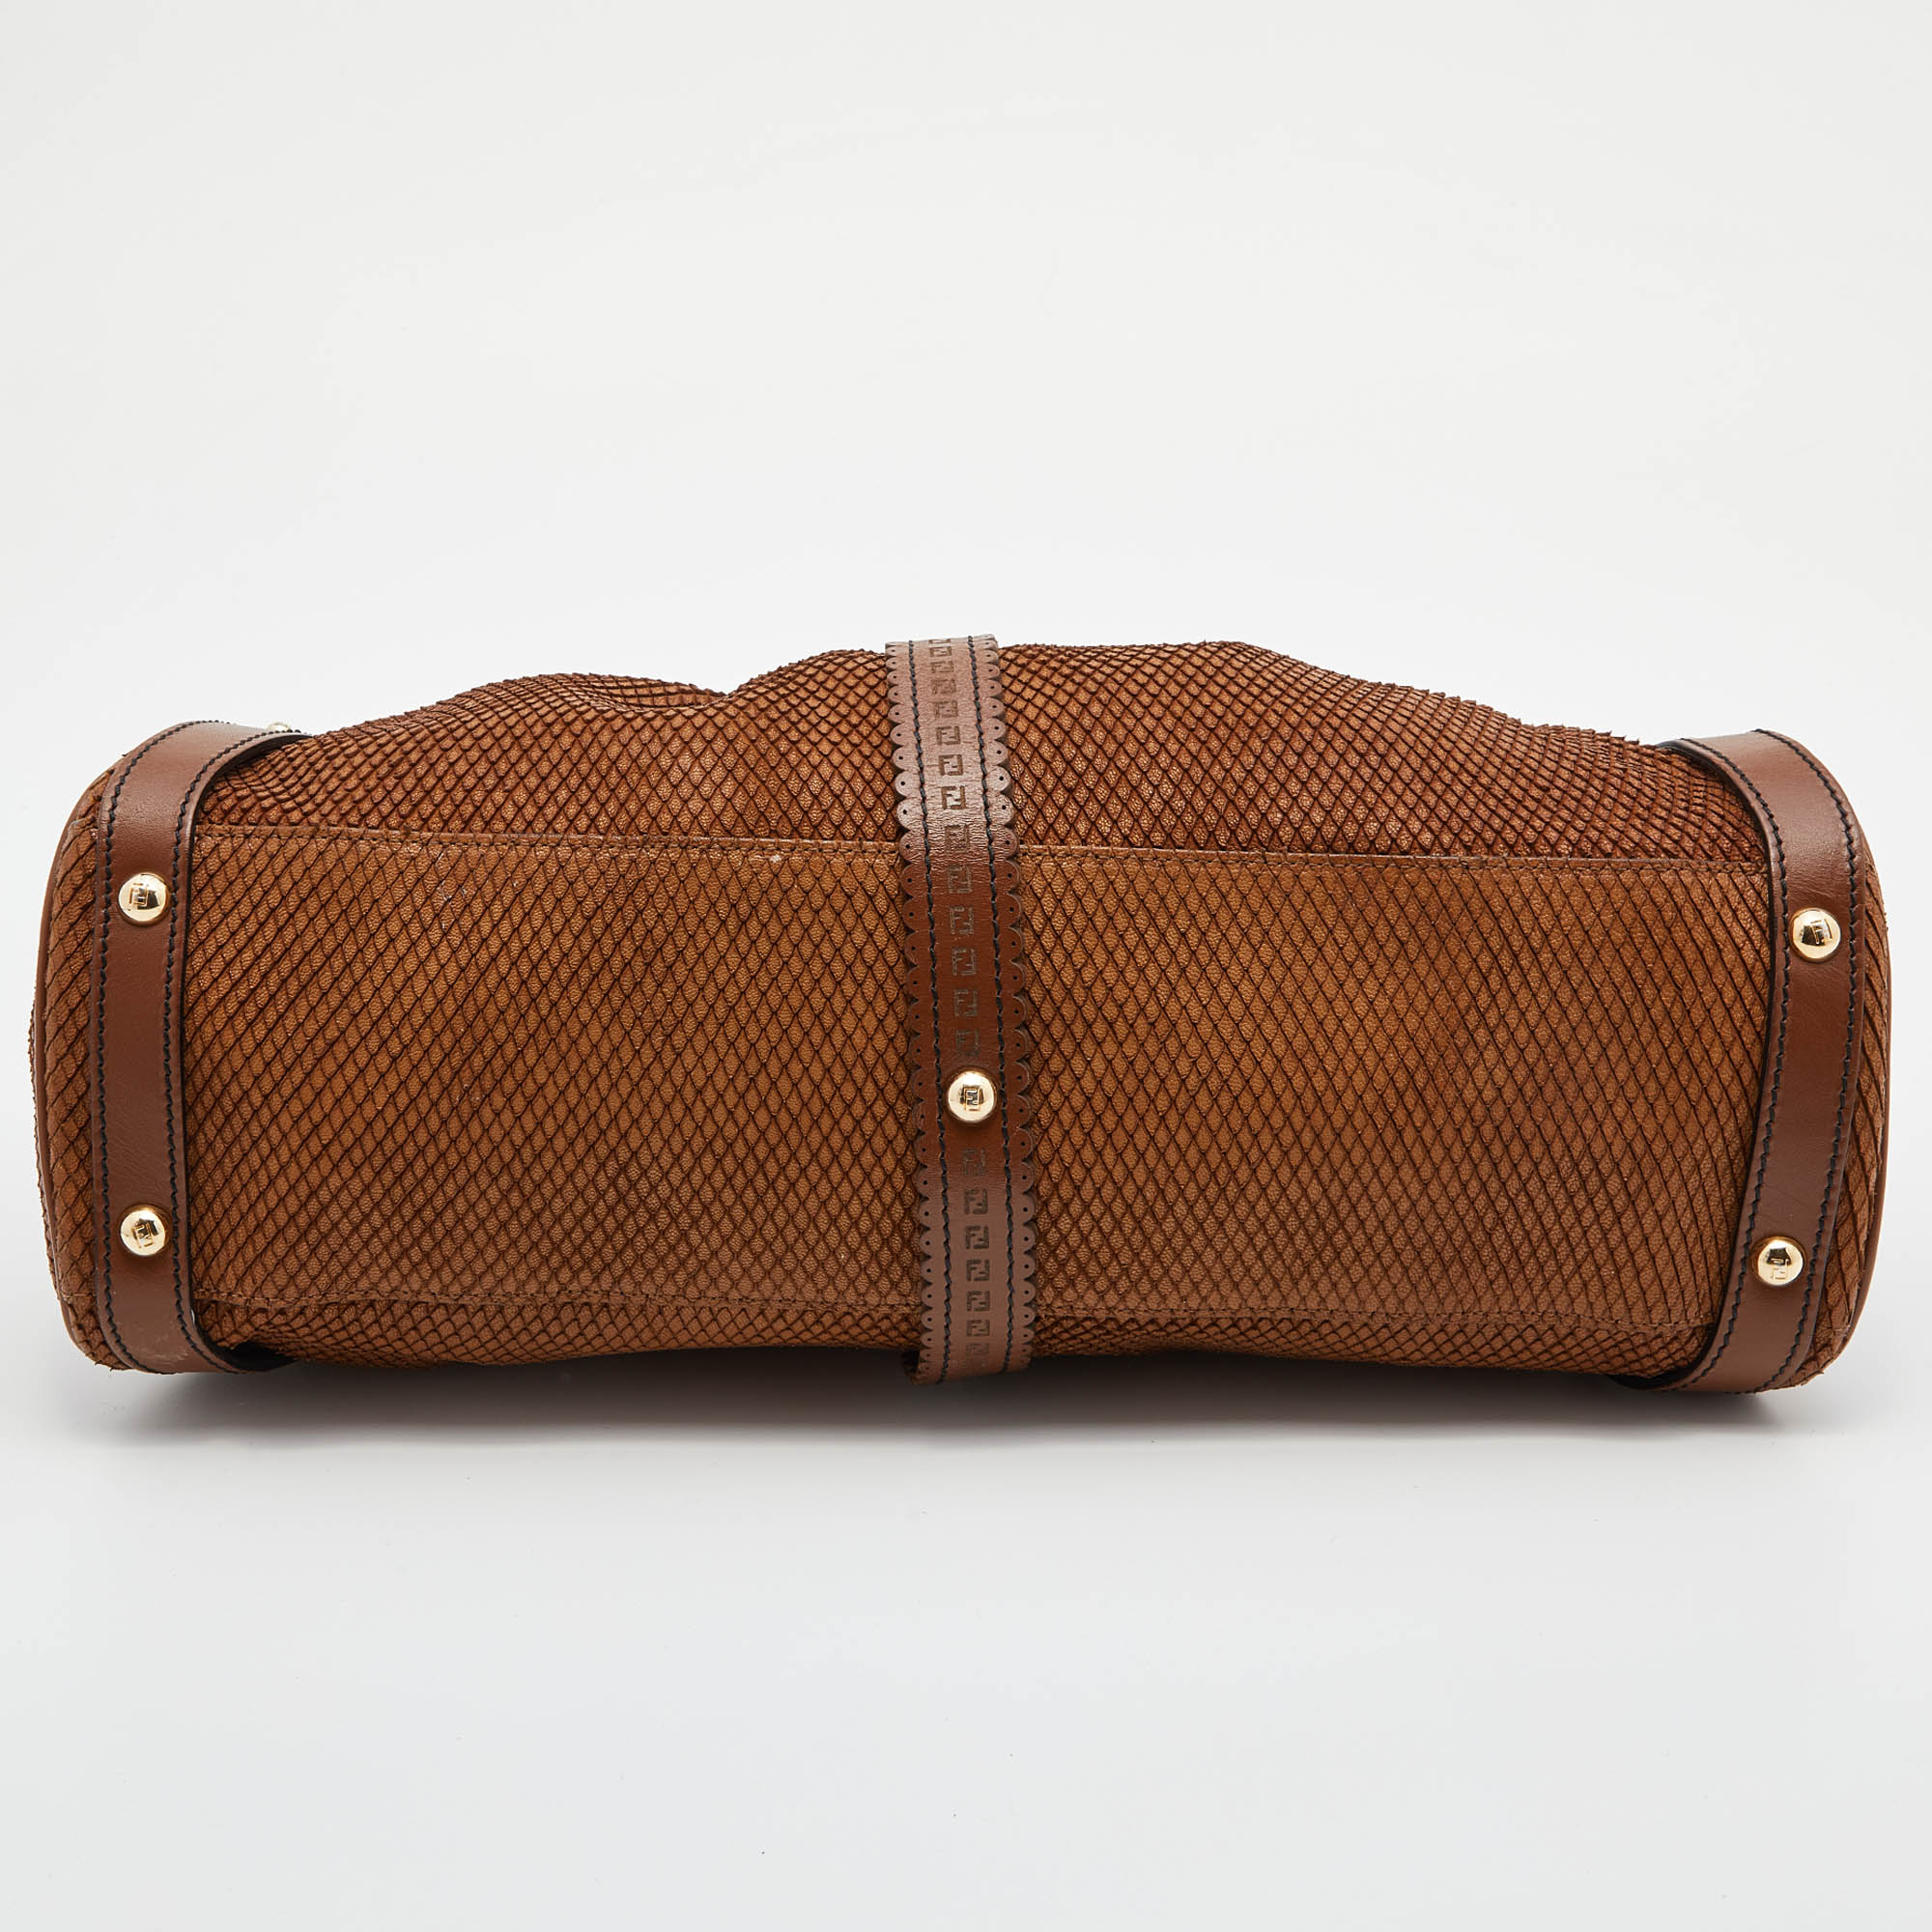 Fendi Tan/Brown Snakeskin Embossed Leather Magic Shoulder Bag